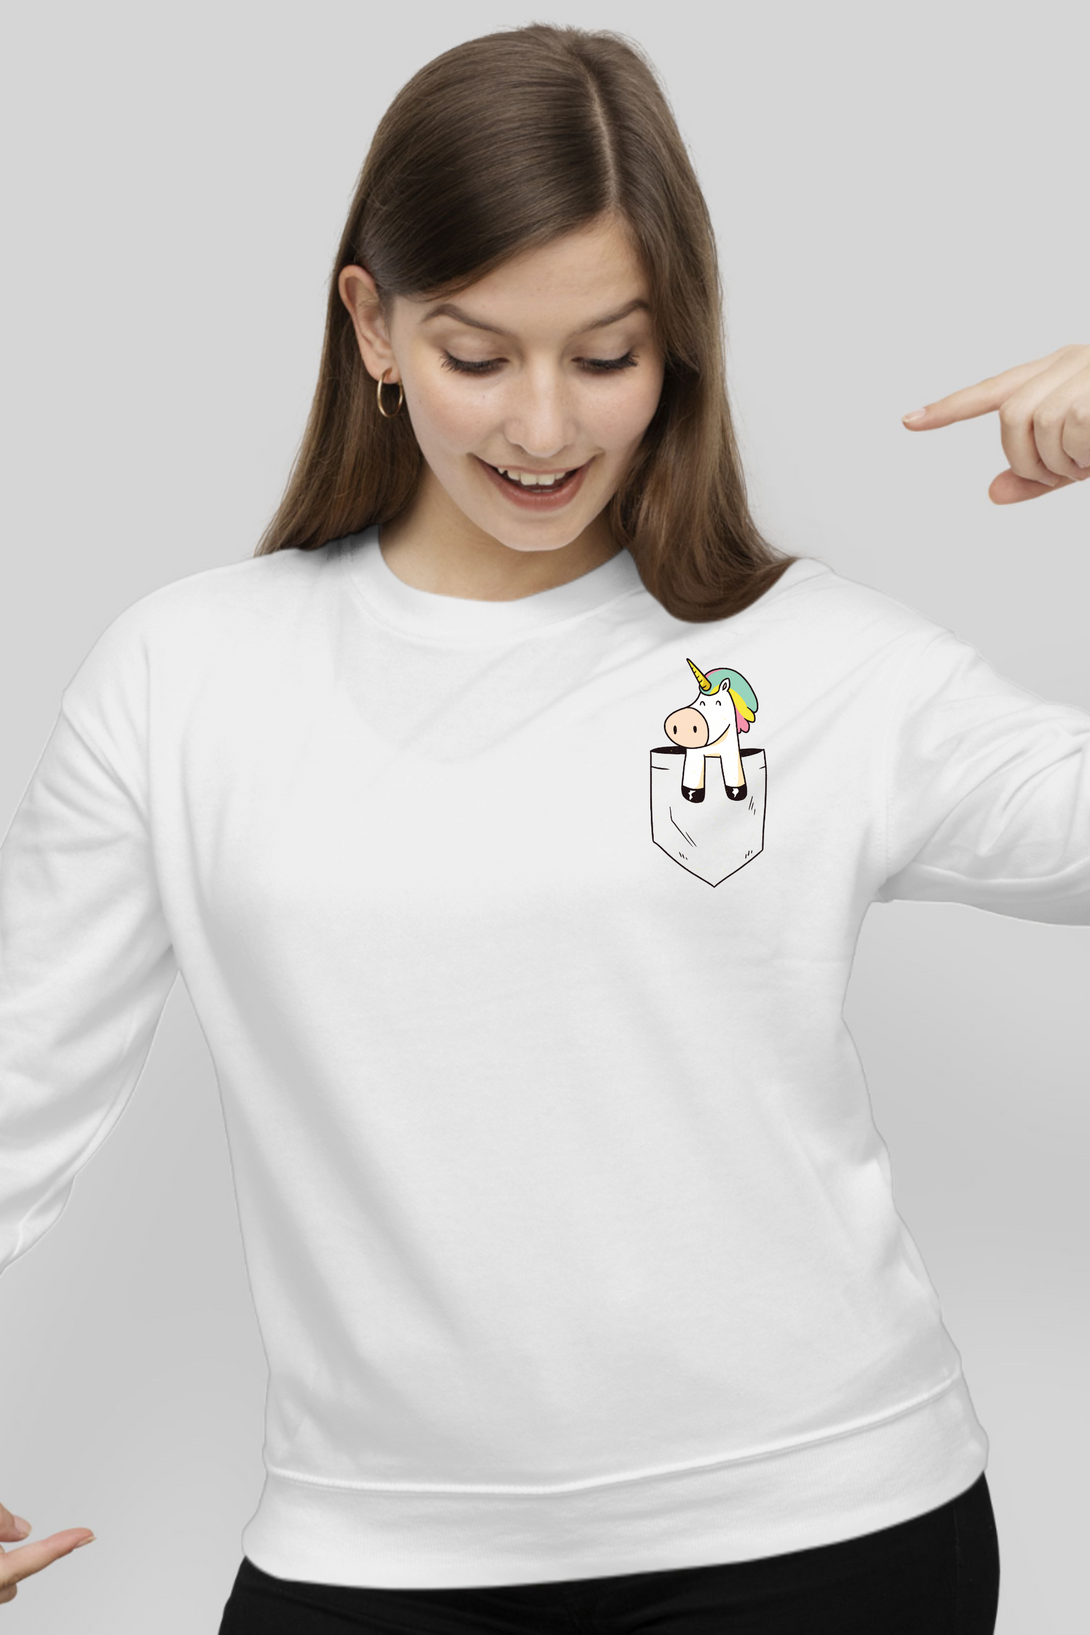 Unicorn In Pocket White Printed Sweatshirt For Women - WowWaves - 3